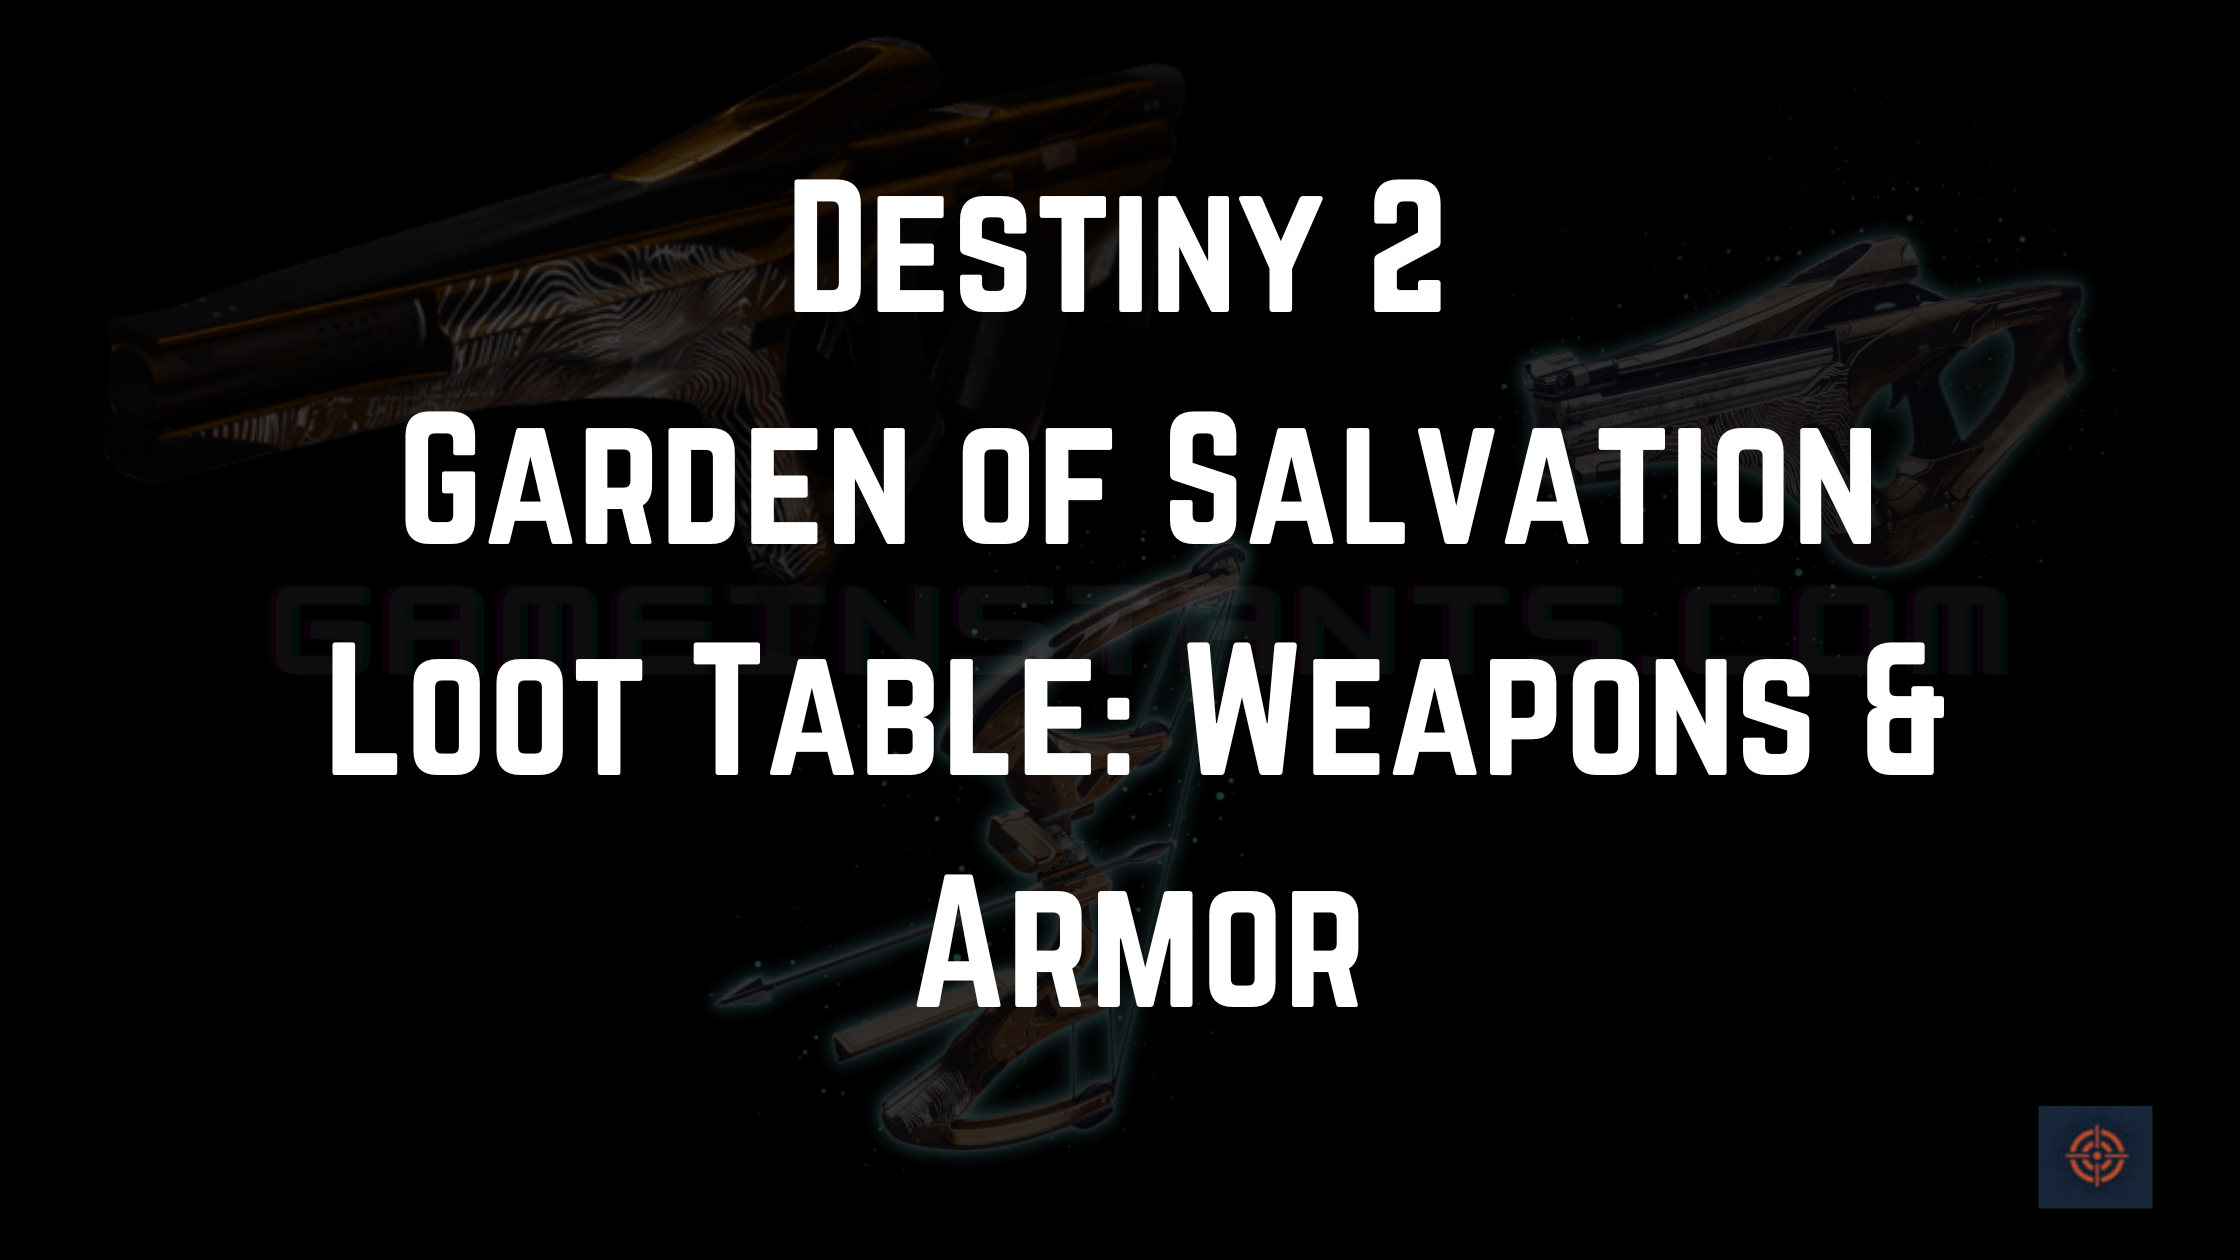 Destiny 2 Garden of Salvation Loot Table Weapons Armor